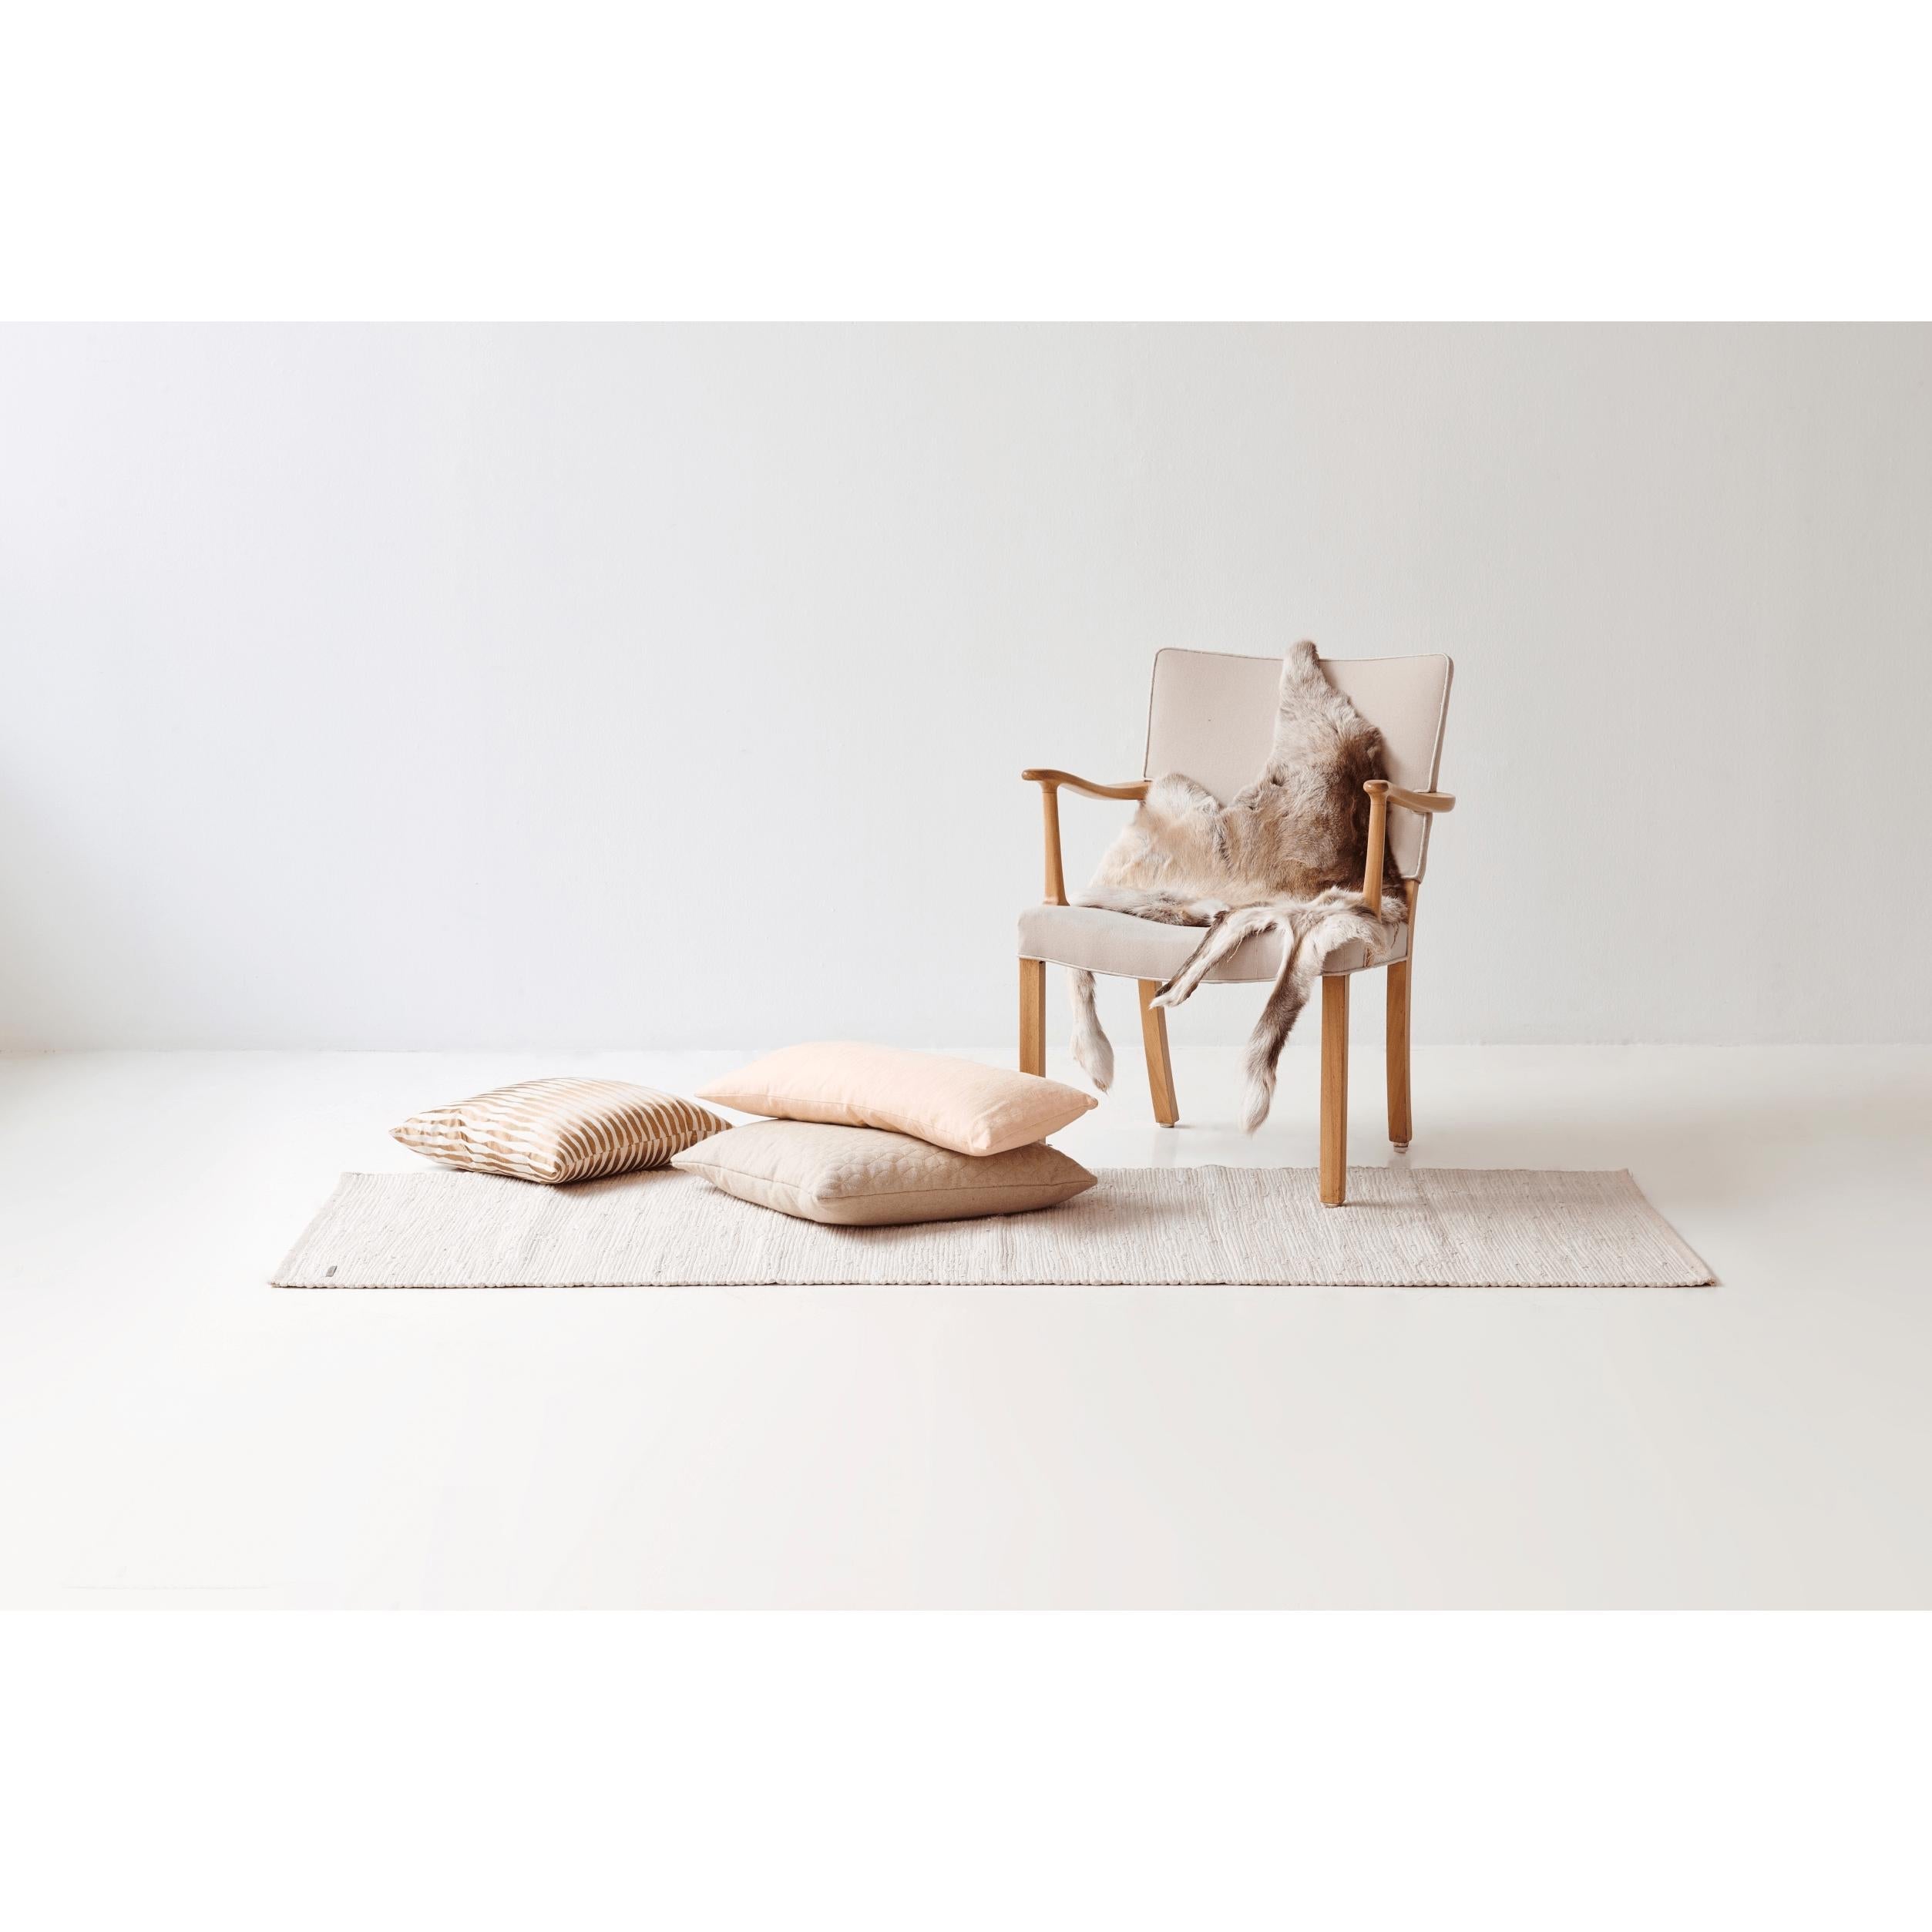 Rug Solid Coton Tapon Desert blanc, 60 x 90 cm